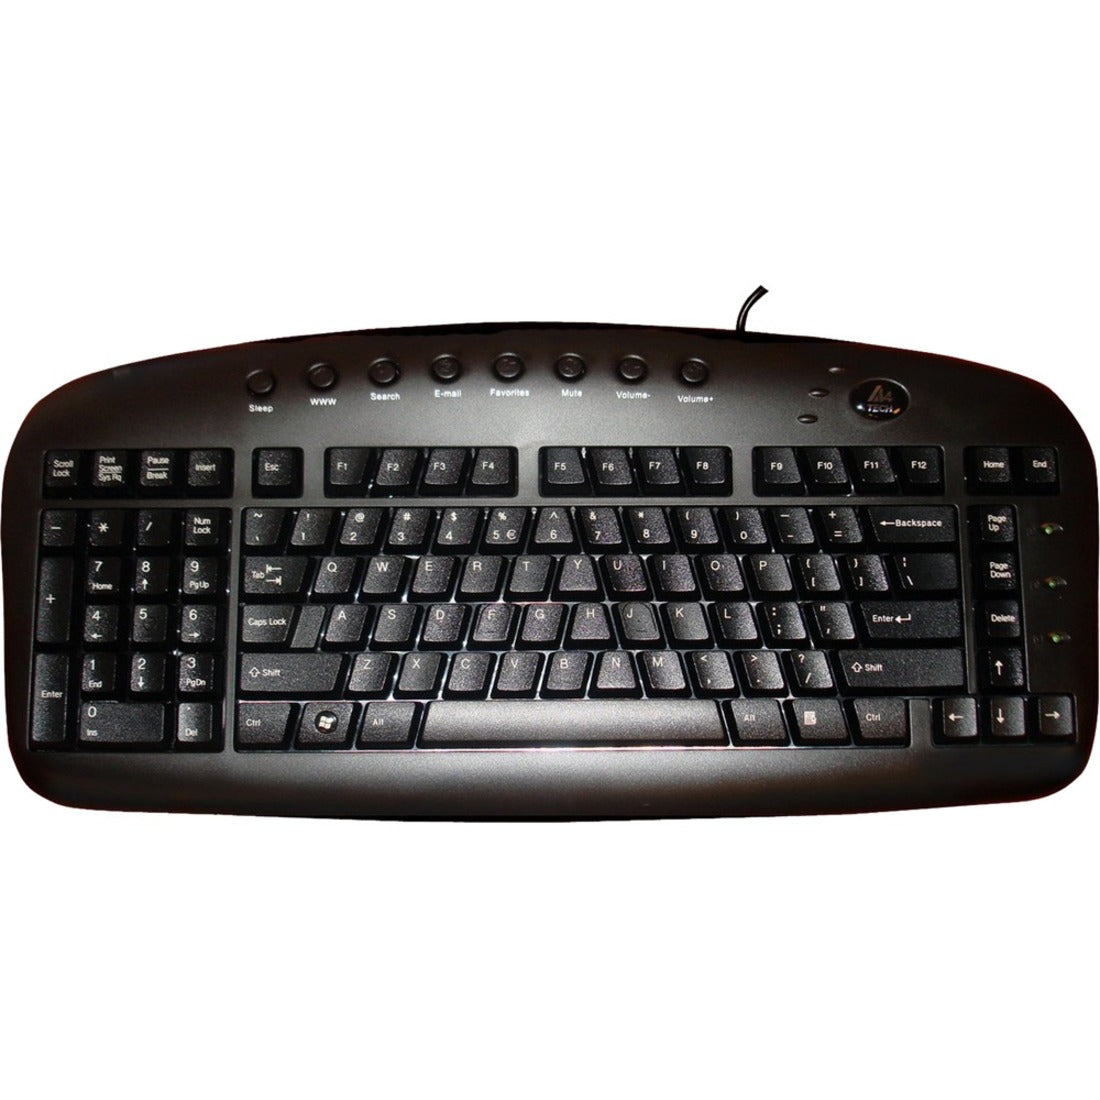 Ergoguys KBS-29BLK Left Handed Ergonomic Keyboard Wired USB Black, 1 Year Limited Warranty, Membrane Keyswitch Technology